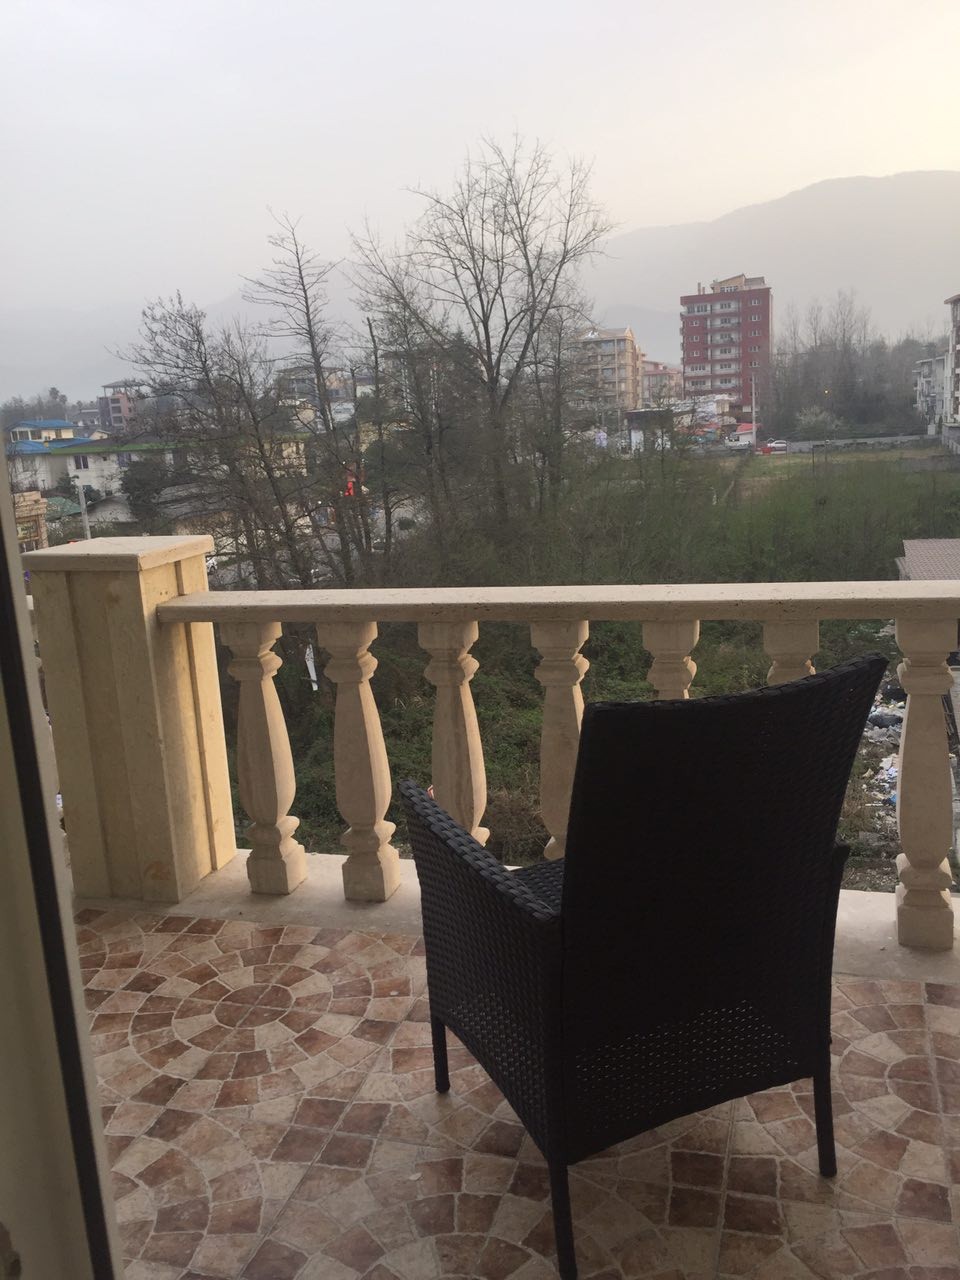 townee آپارتمان در سلمان شهر مازندران